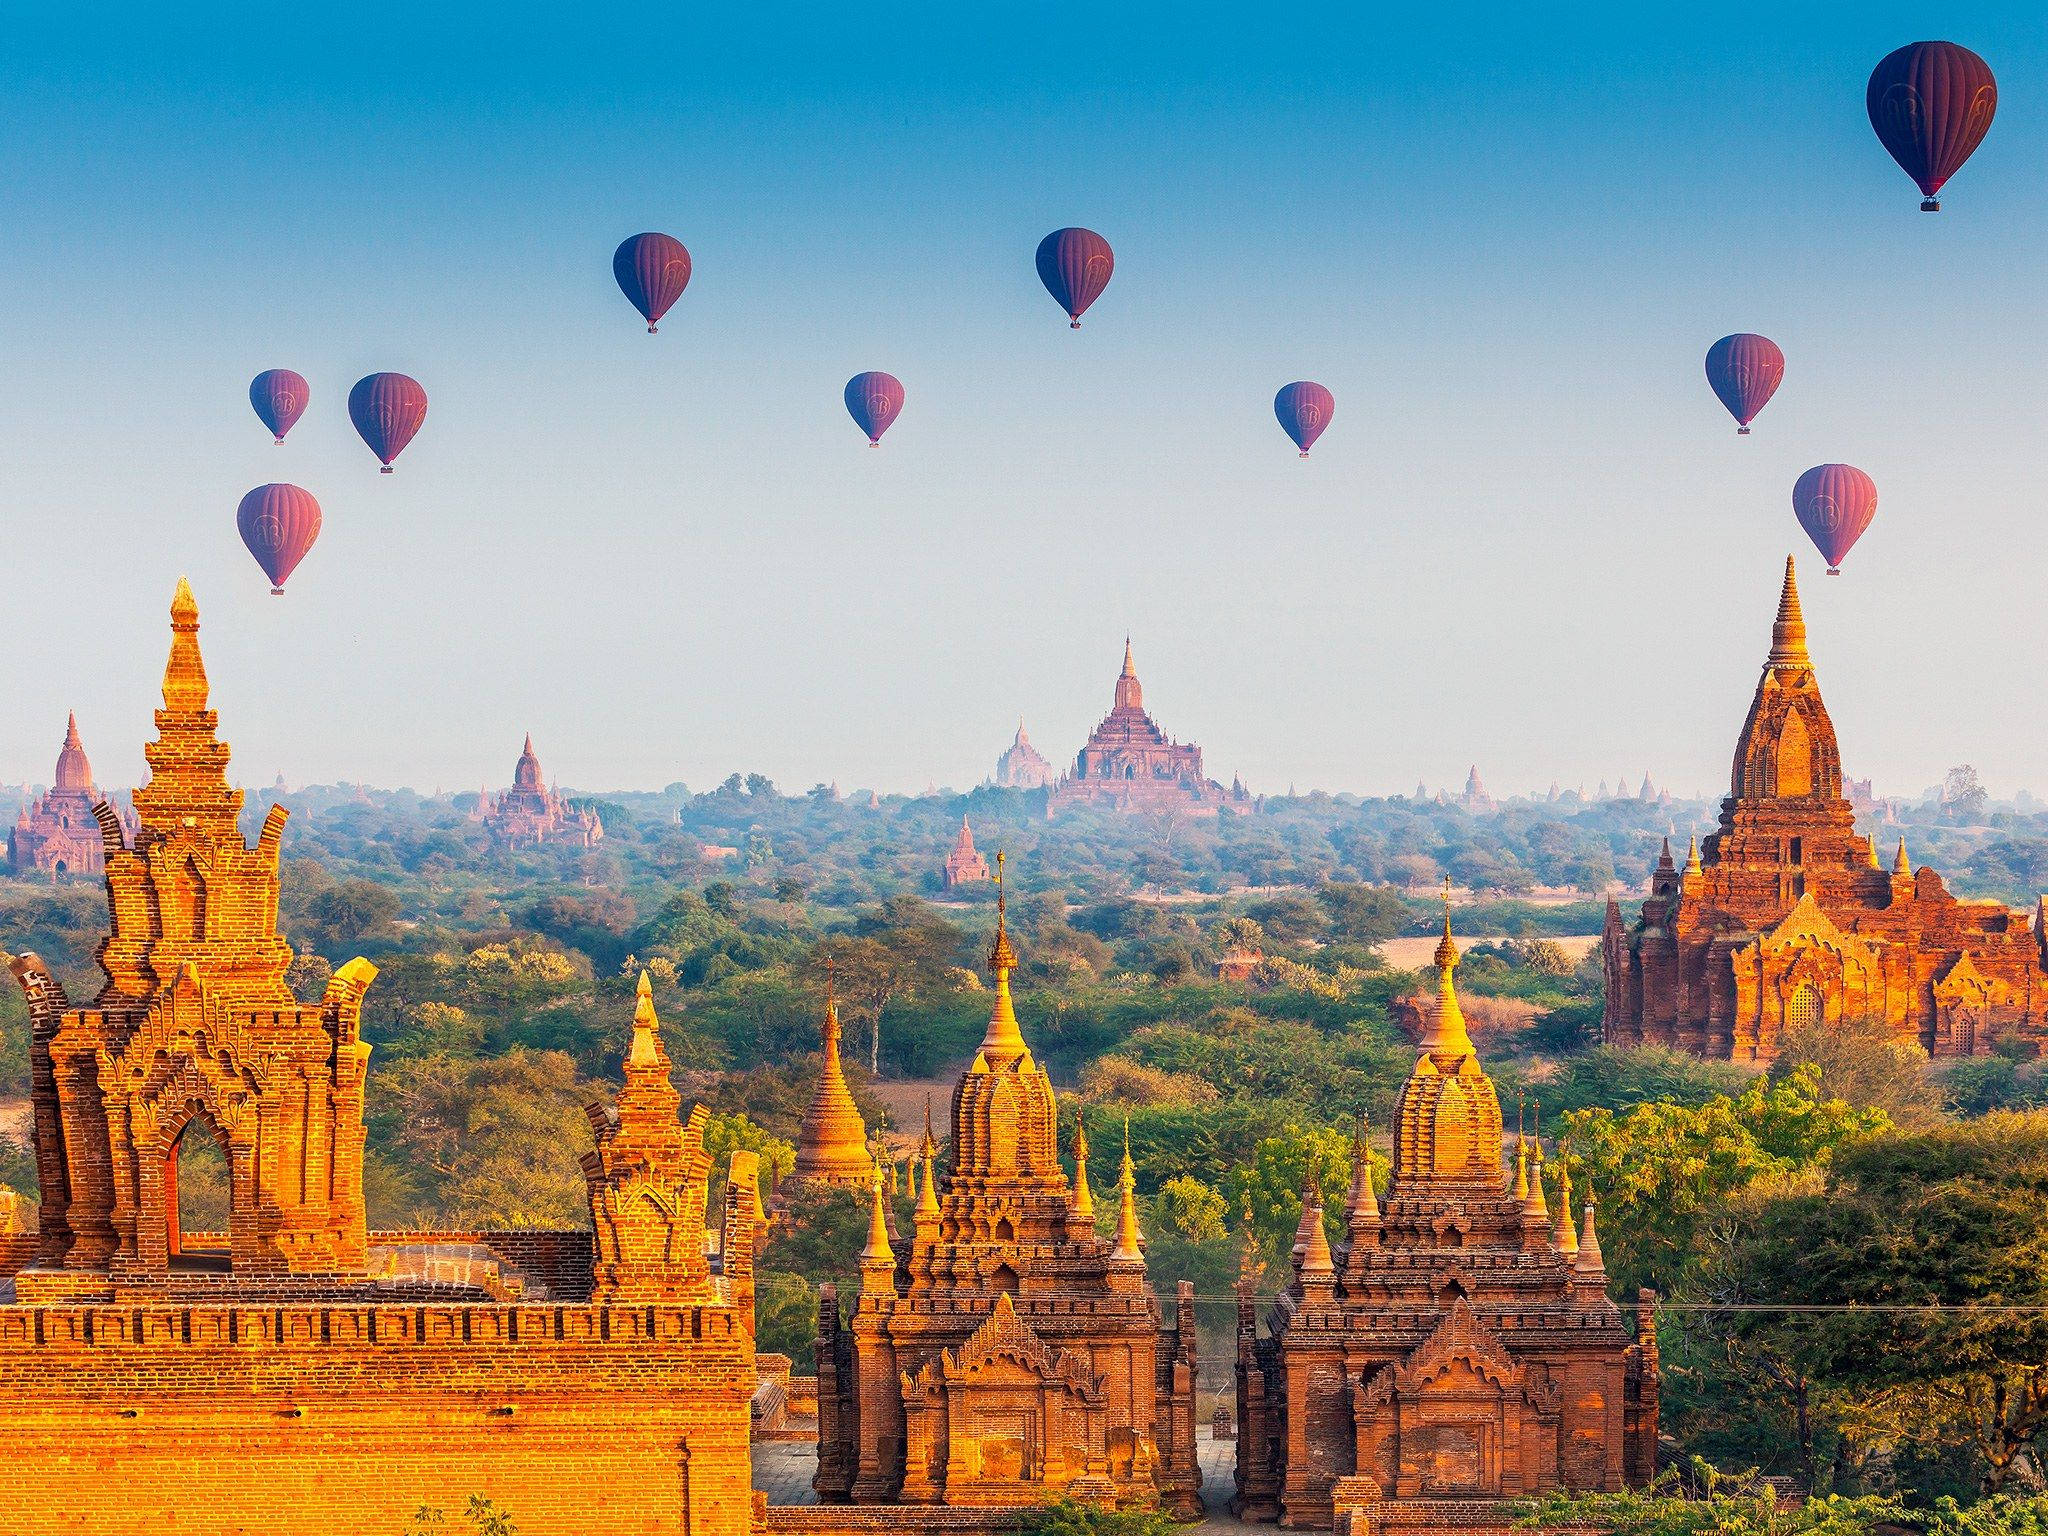 Страна 1000 городов. Баган Мьянма. Паган (Баган), Мьянма. Баган Мьянма. Паган (Баган) — город тысячи храмов. Мандалай Мьянма.